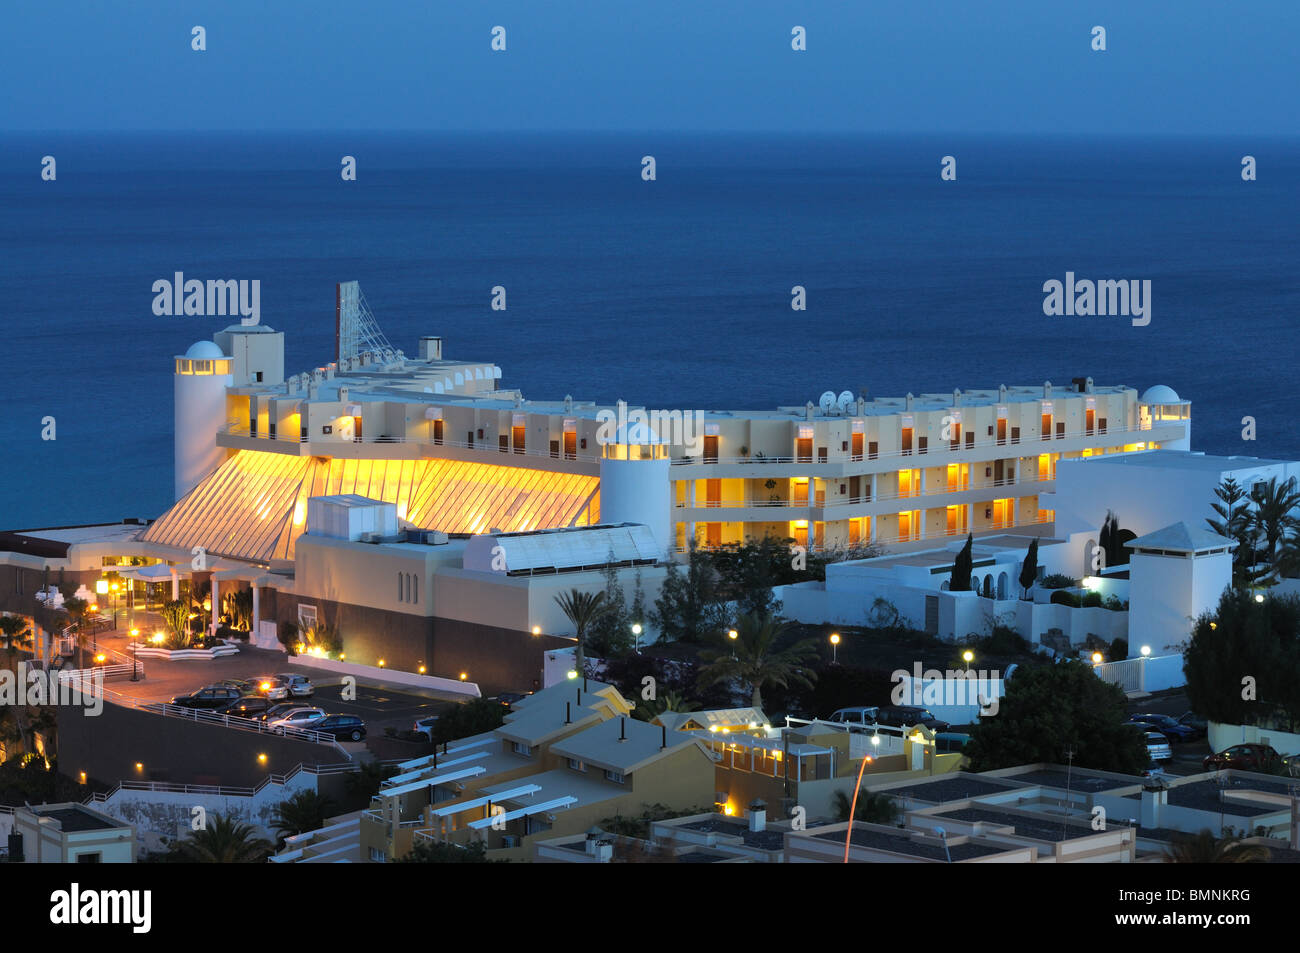 Hotel building at the coast illuminated at night Stock Photo